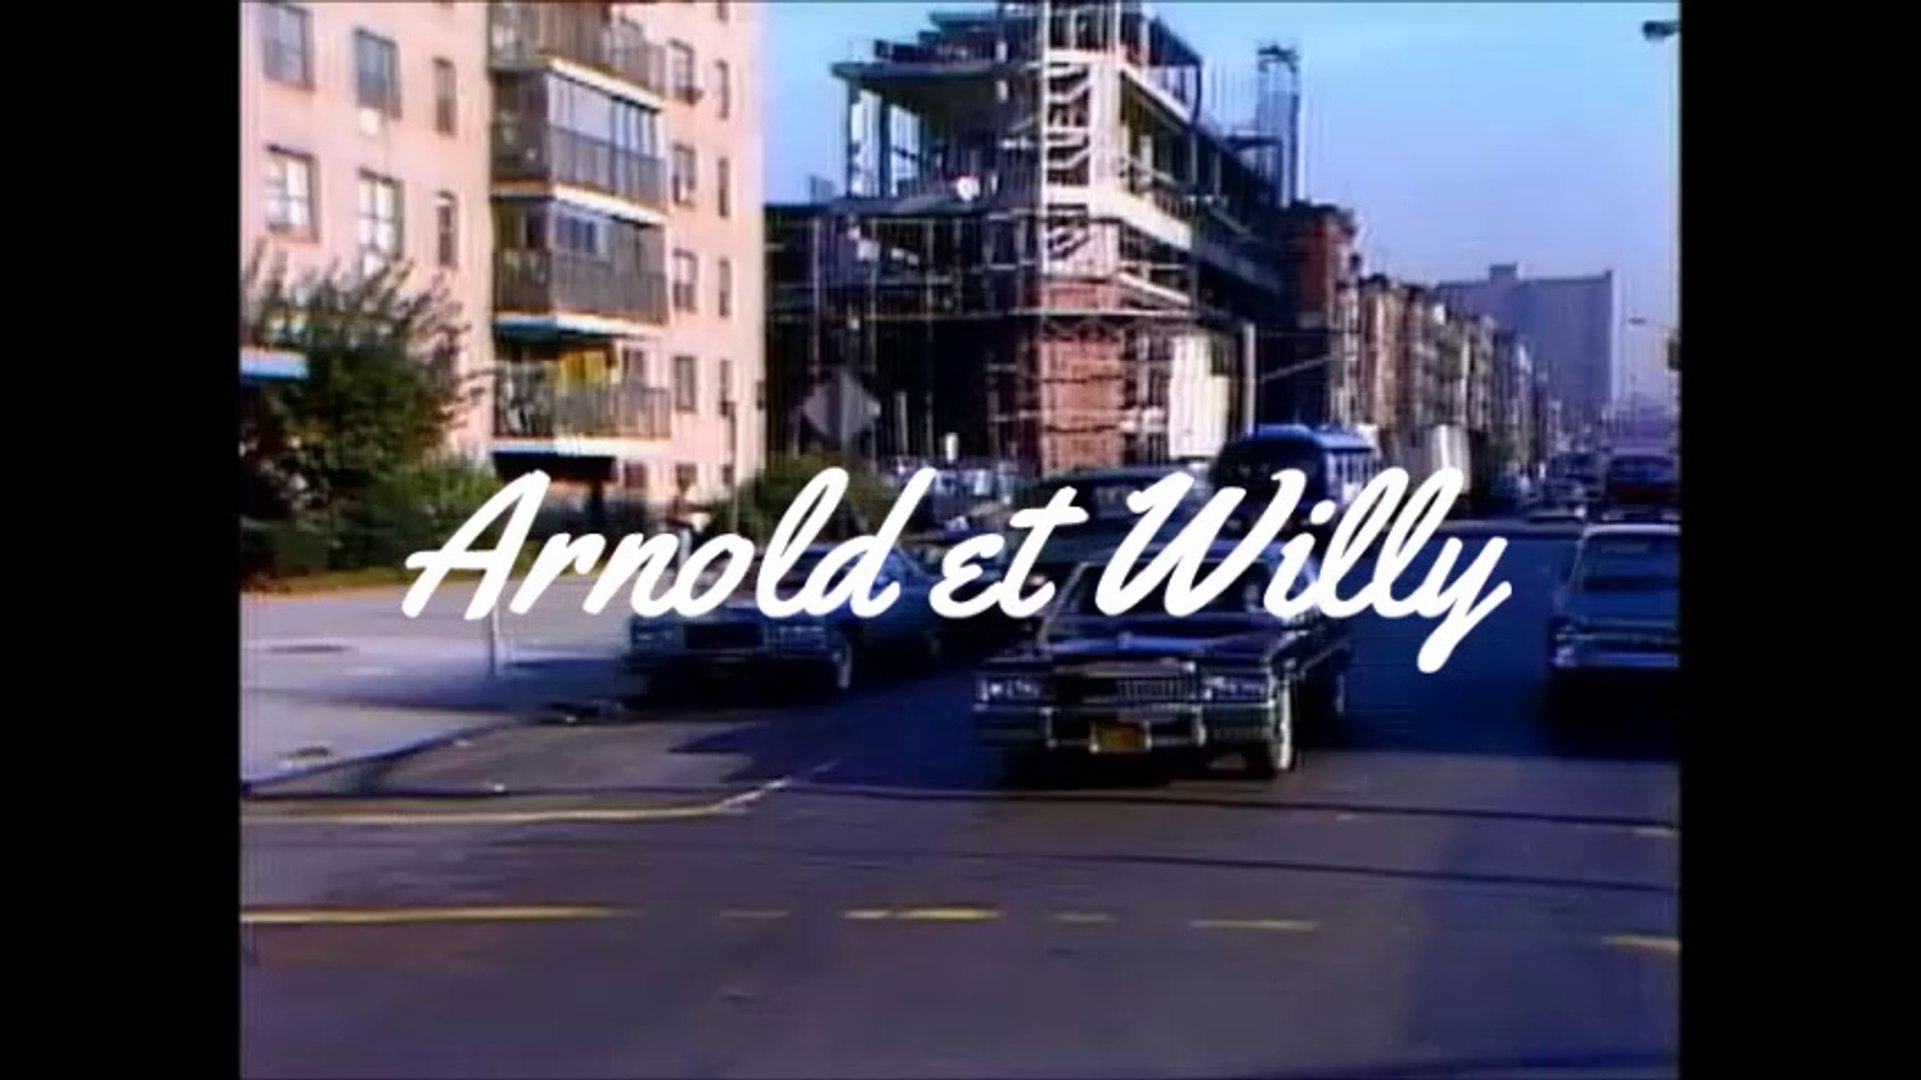 Arnold et willy épisode 02 - Vidéo Dailymotion